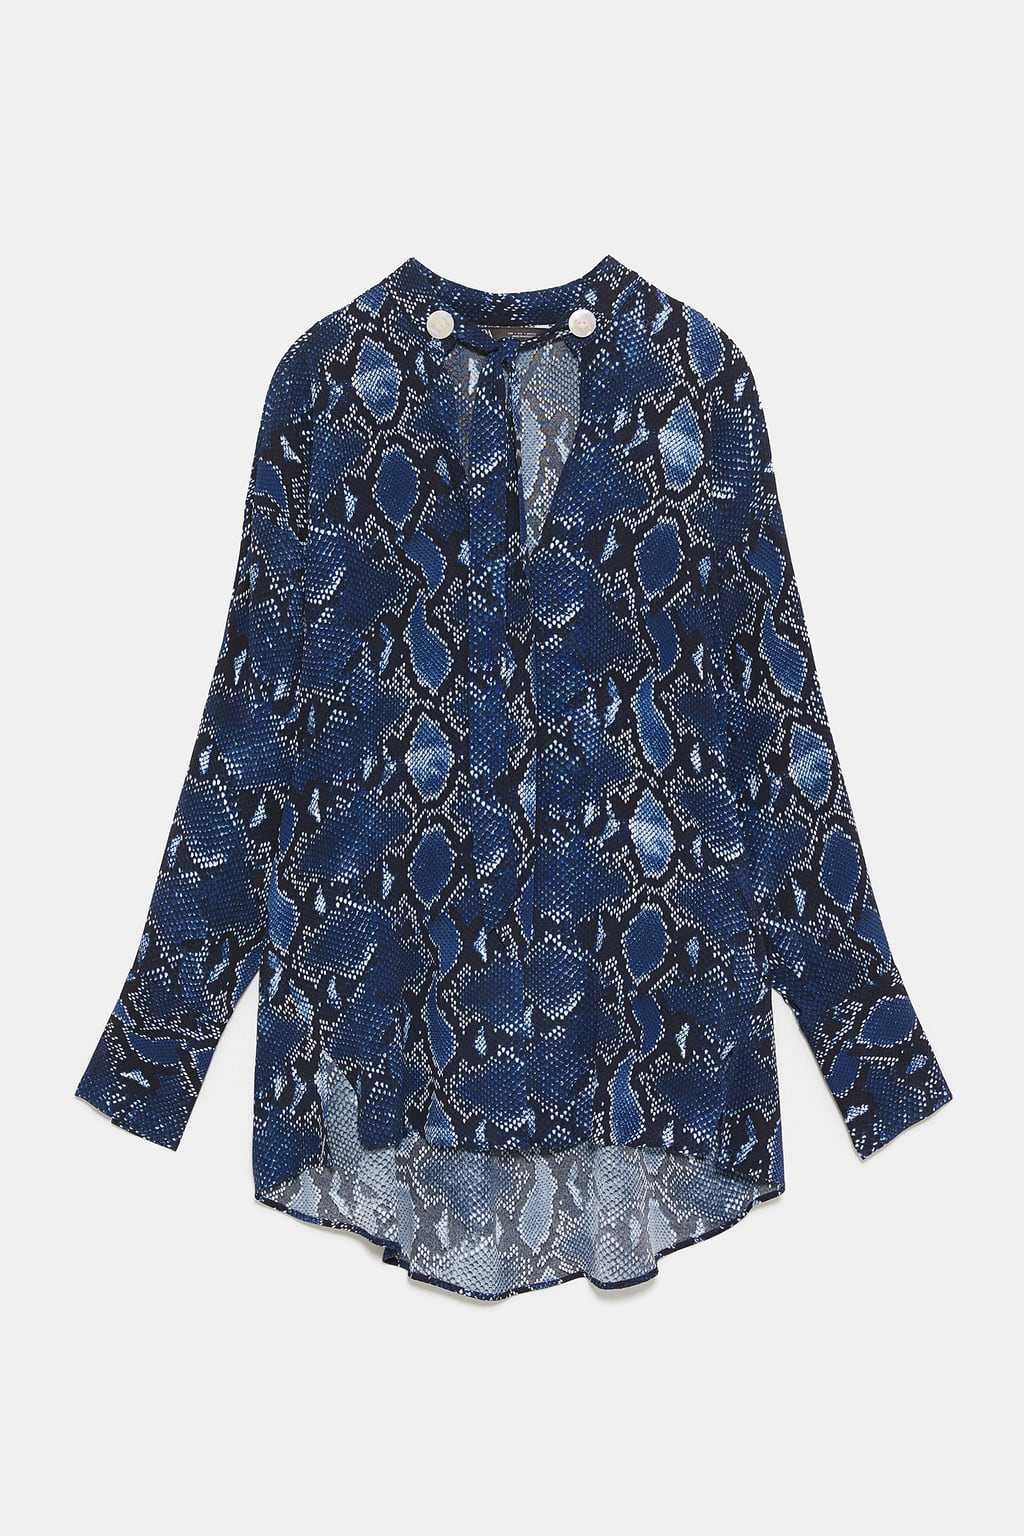 Blusa azul padrão serpente Zara Tam S (veste M) Nova